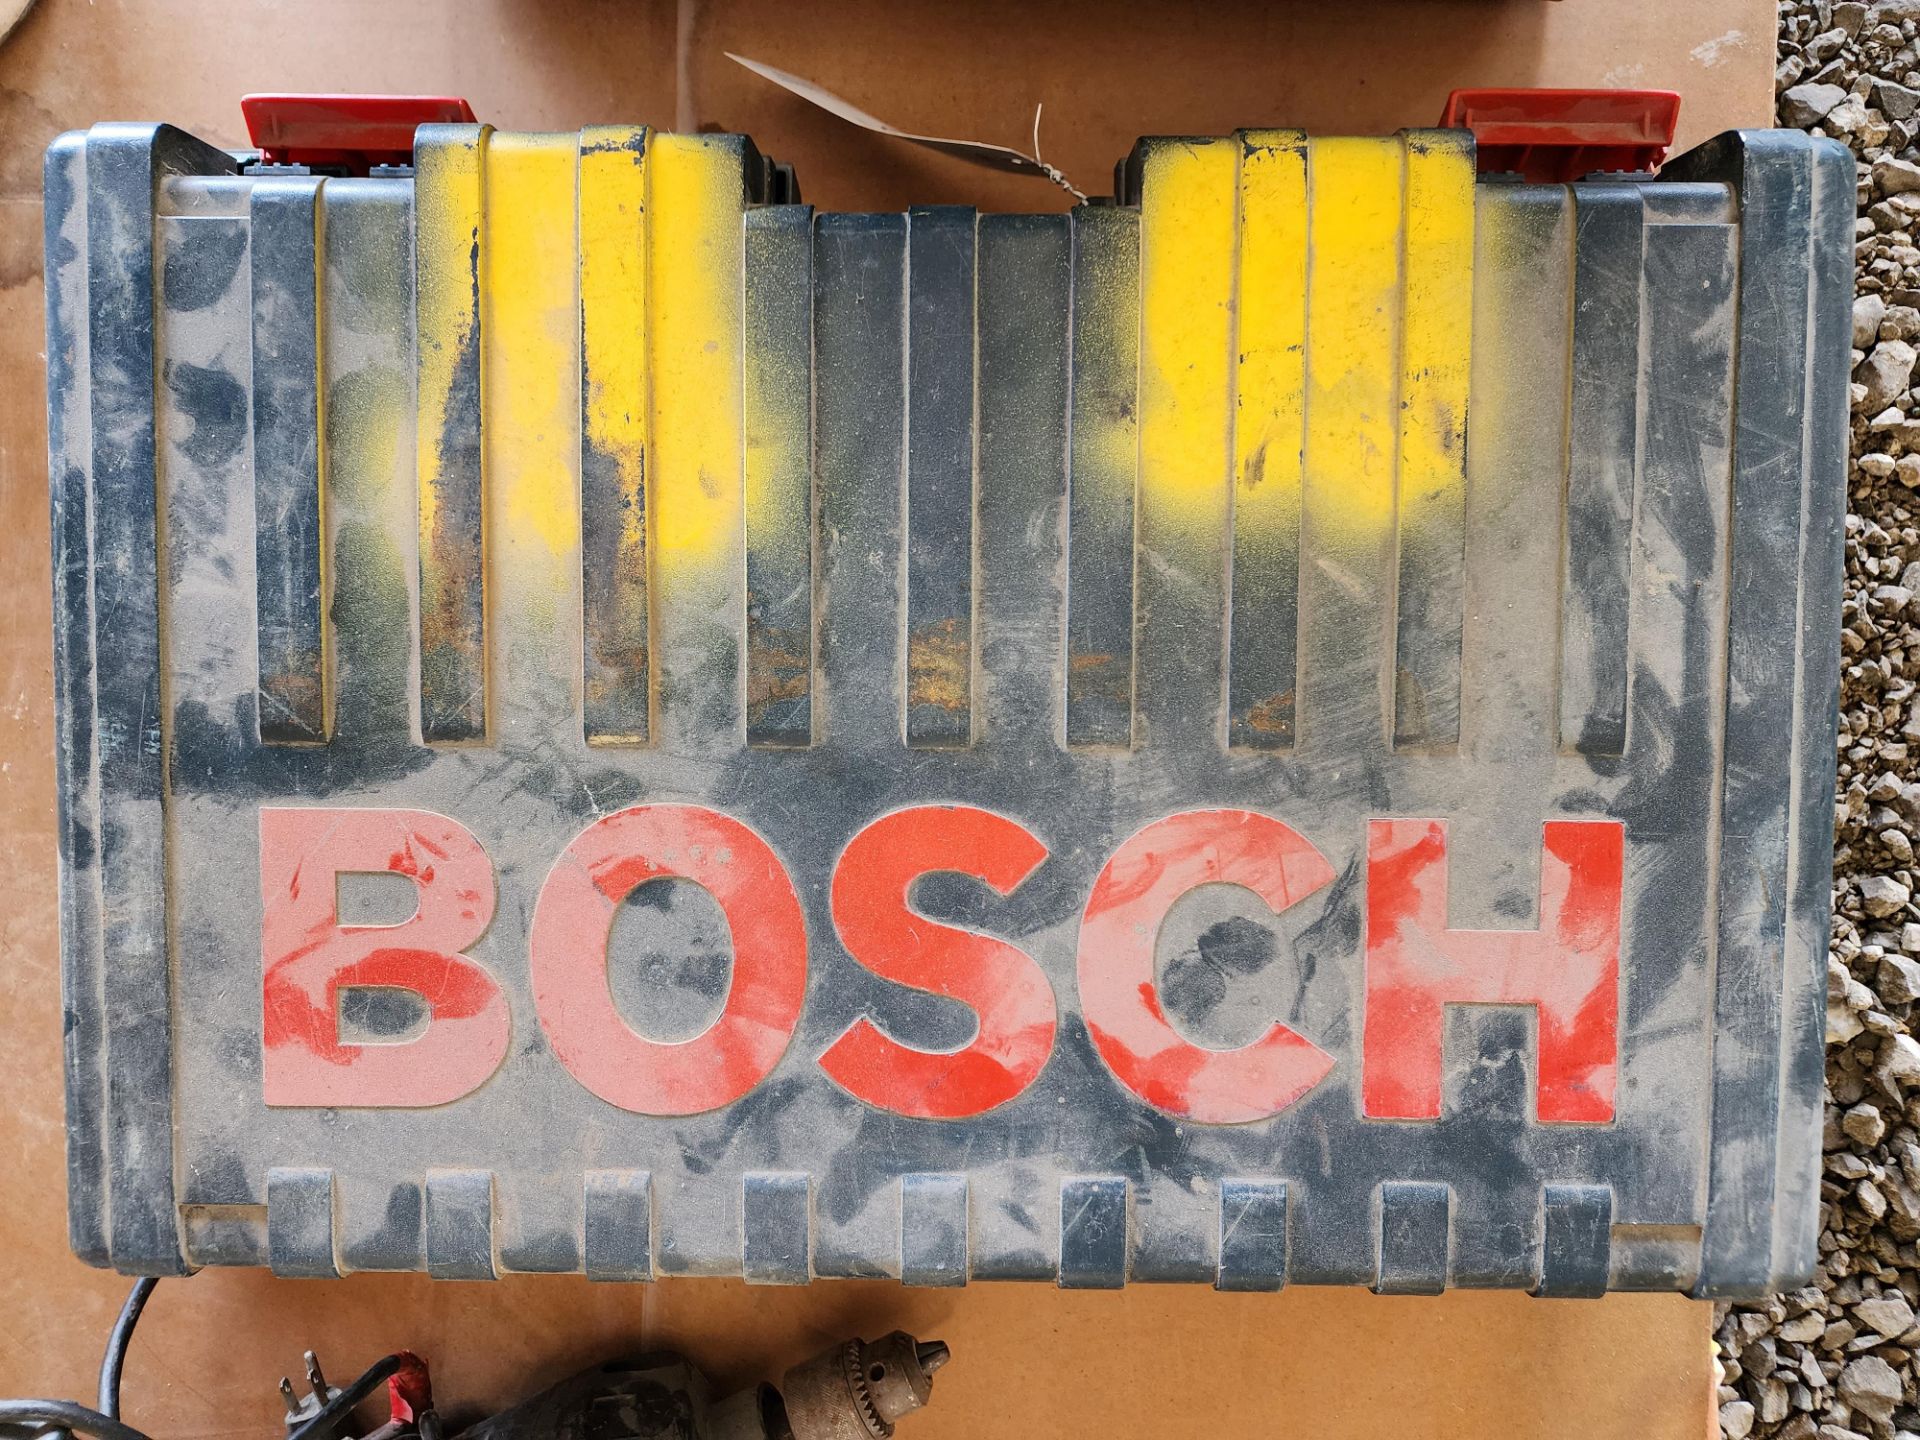 Bosch Model Boschhammer Drill w/Case - Image 3 of 3